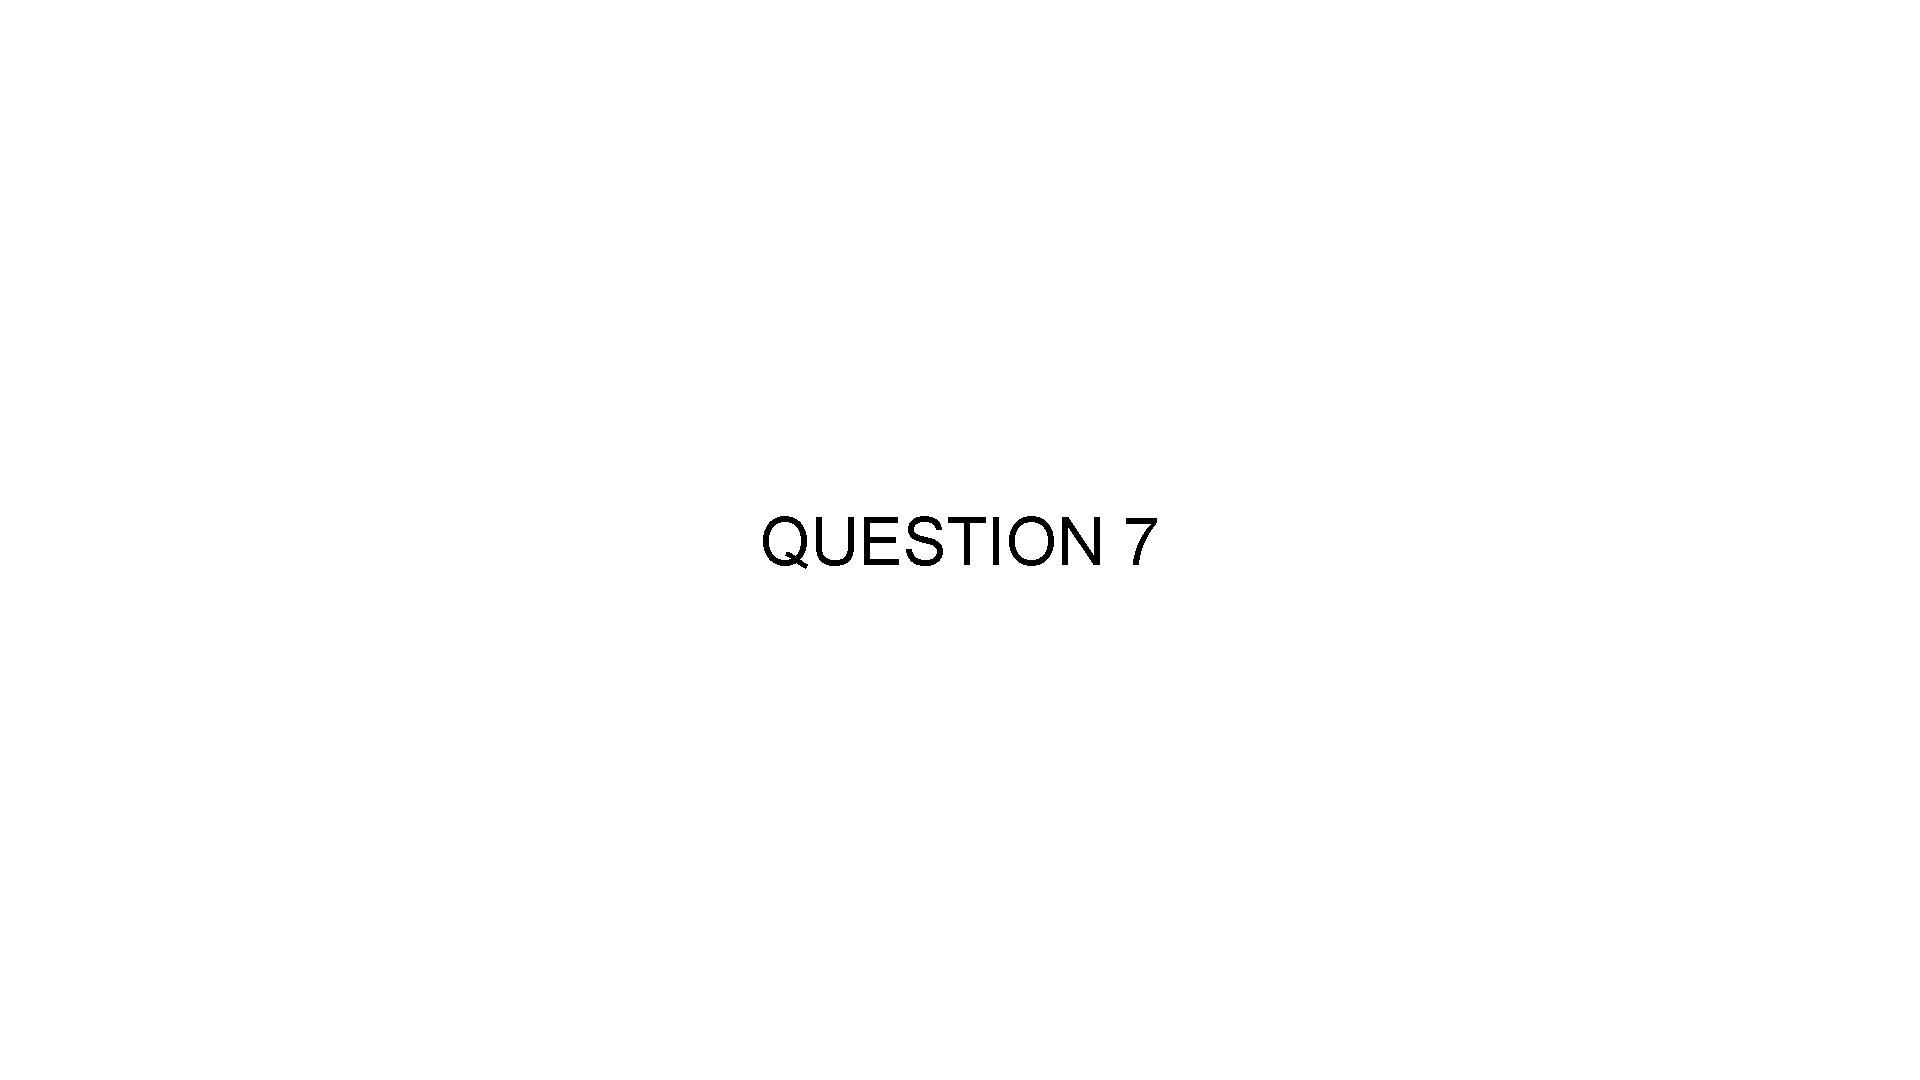 QUESTION 7 